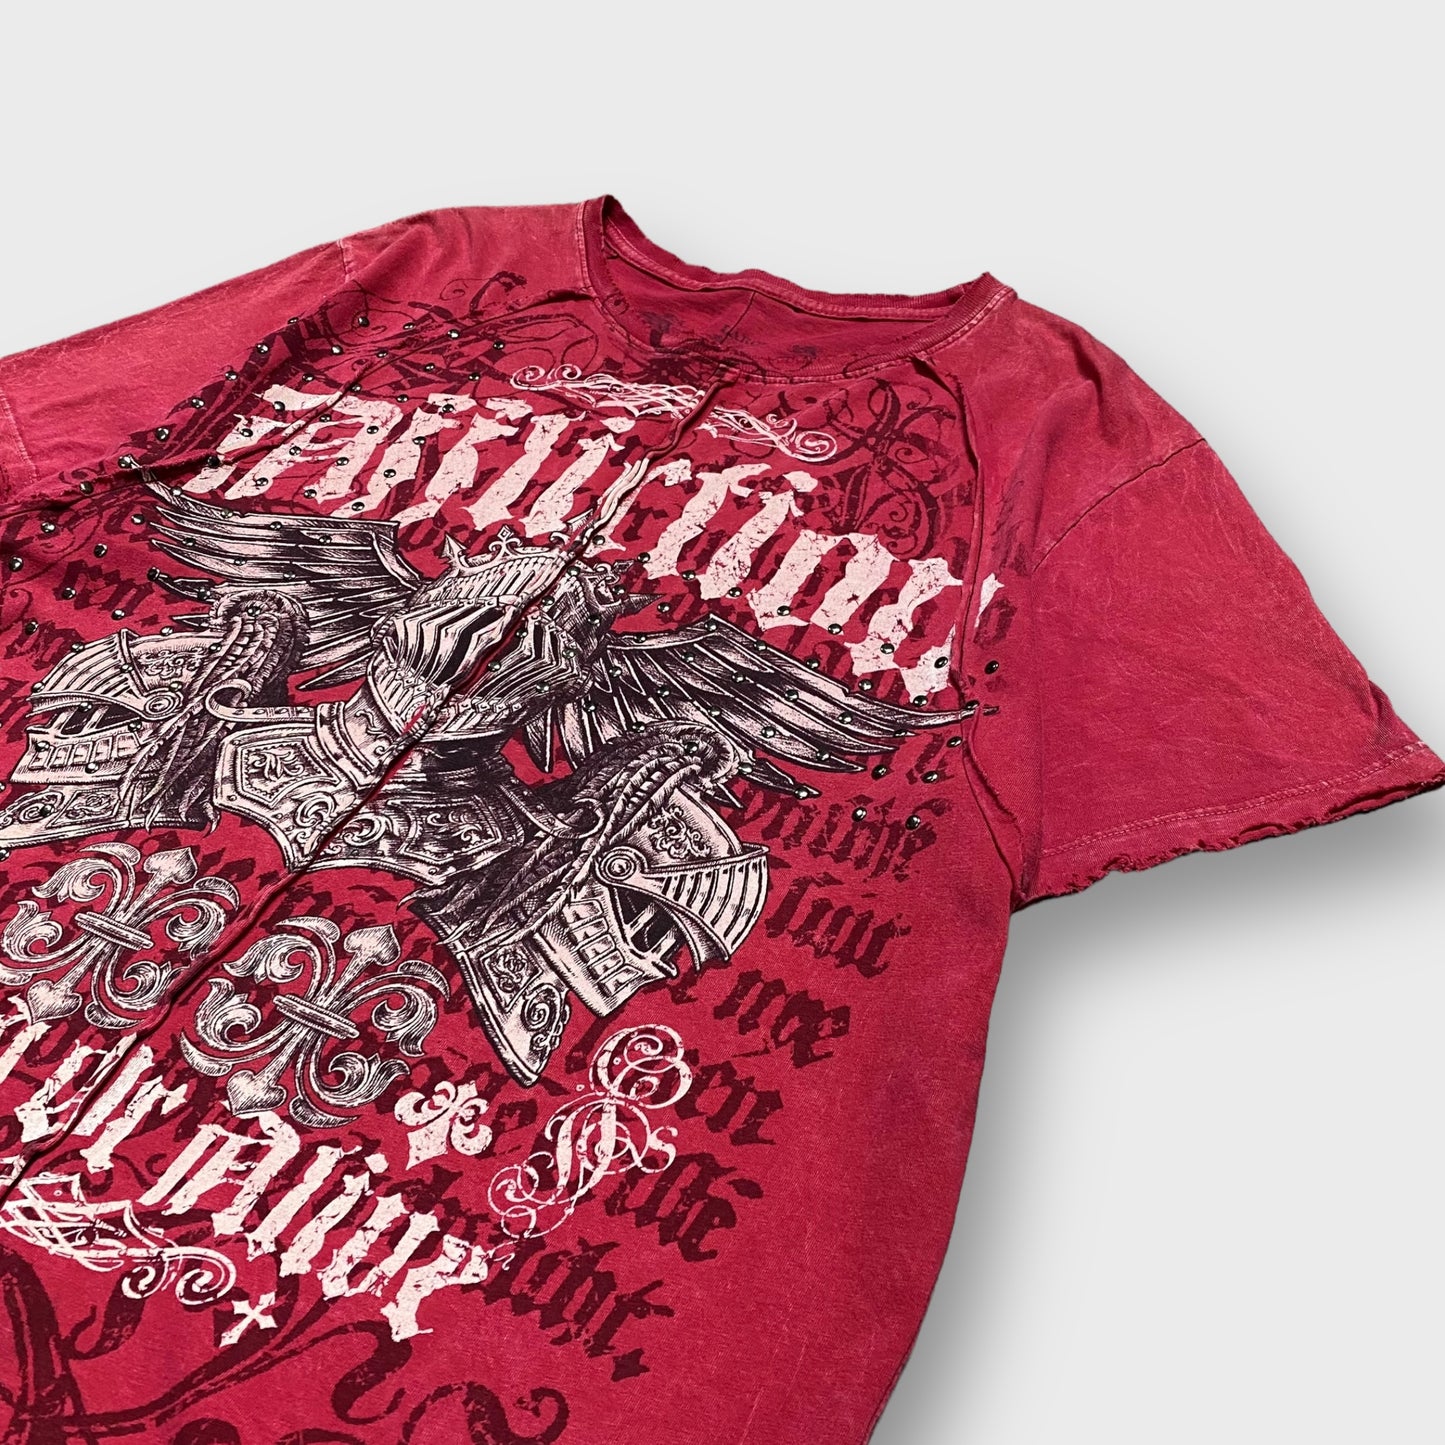 "AFFLICTION" Bijou design t-shirt